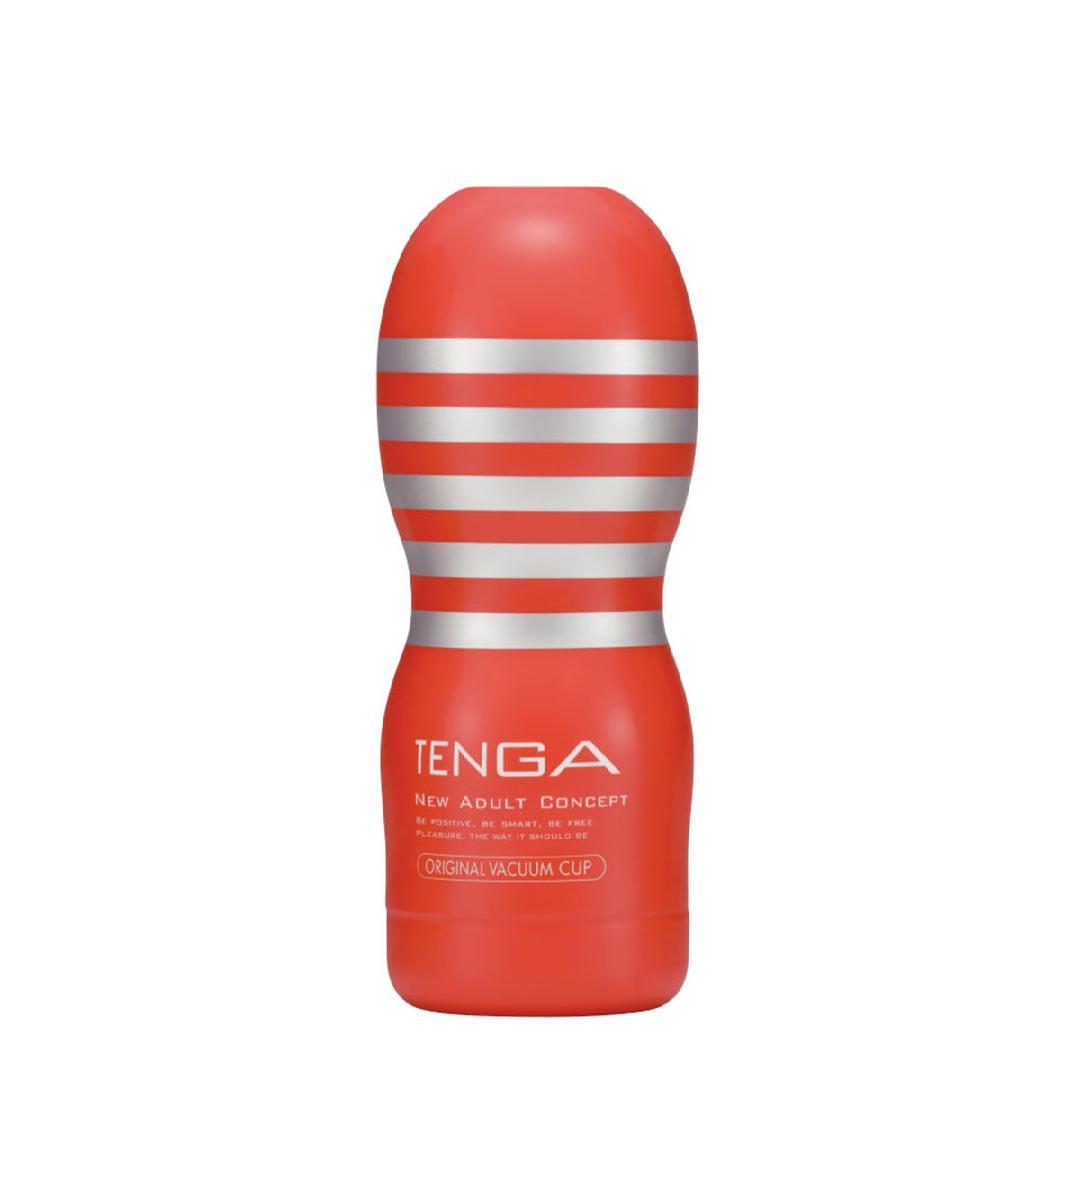 Tenga Standard Original Vac Cup - Buy At Luxury Toy X - Free 3-Day Shipping